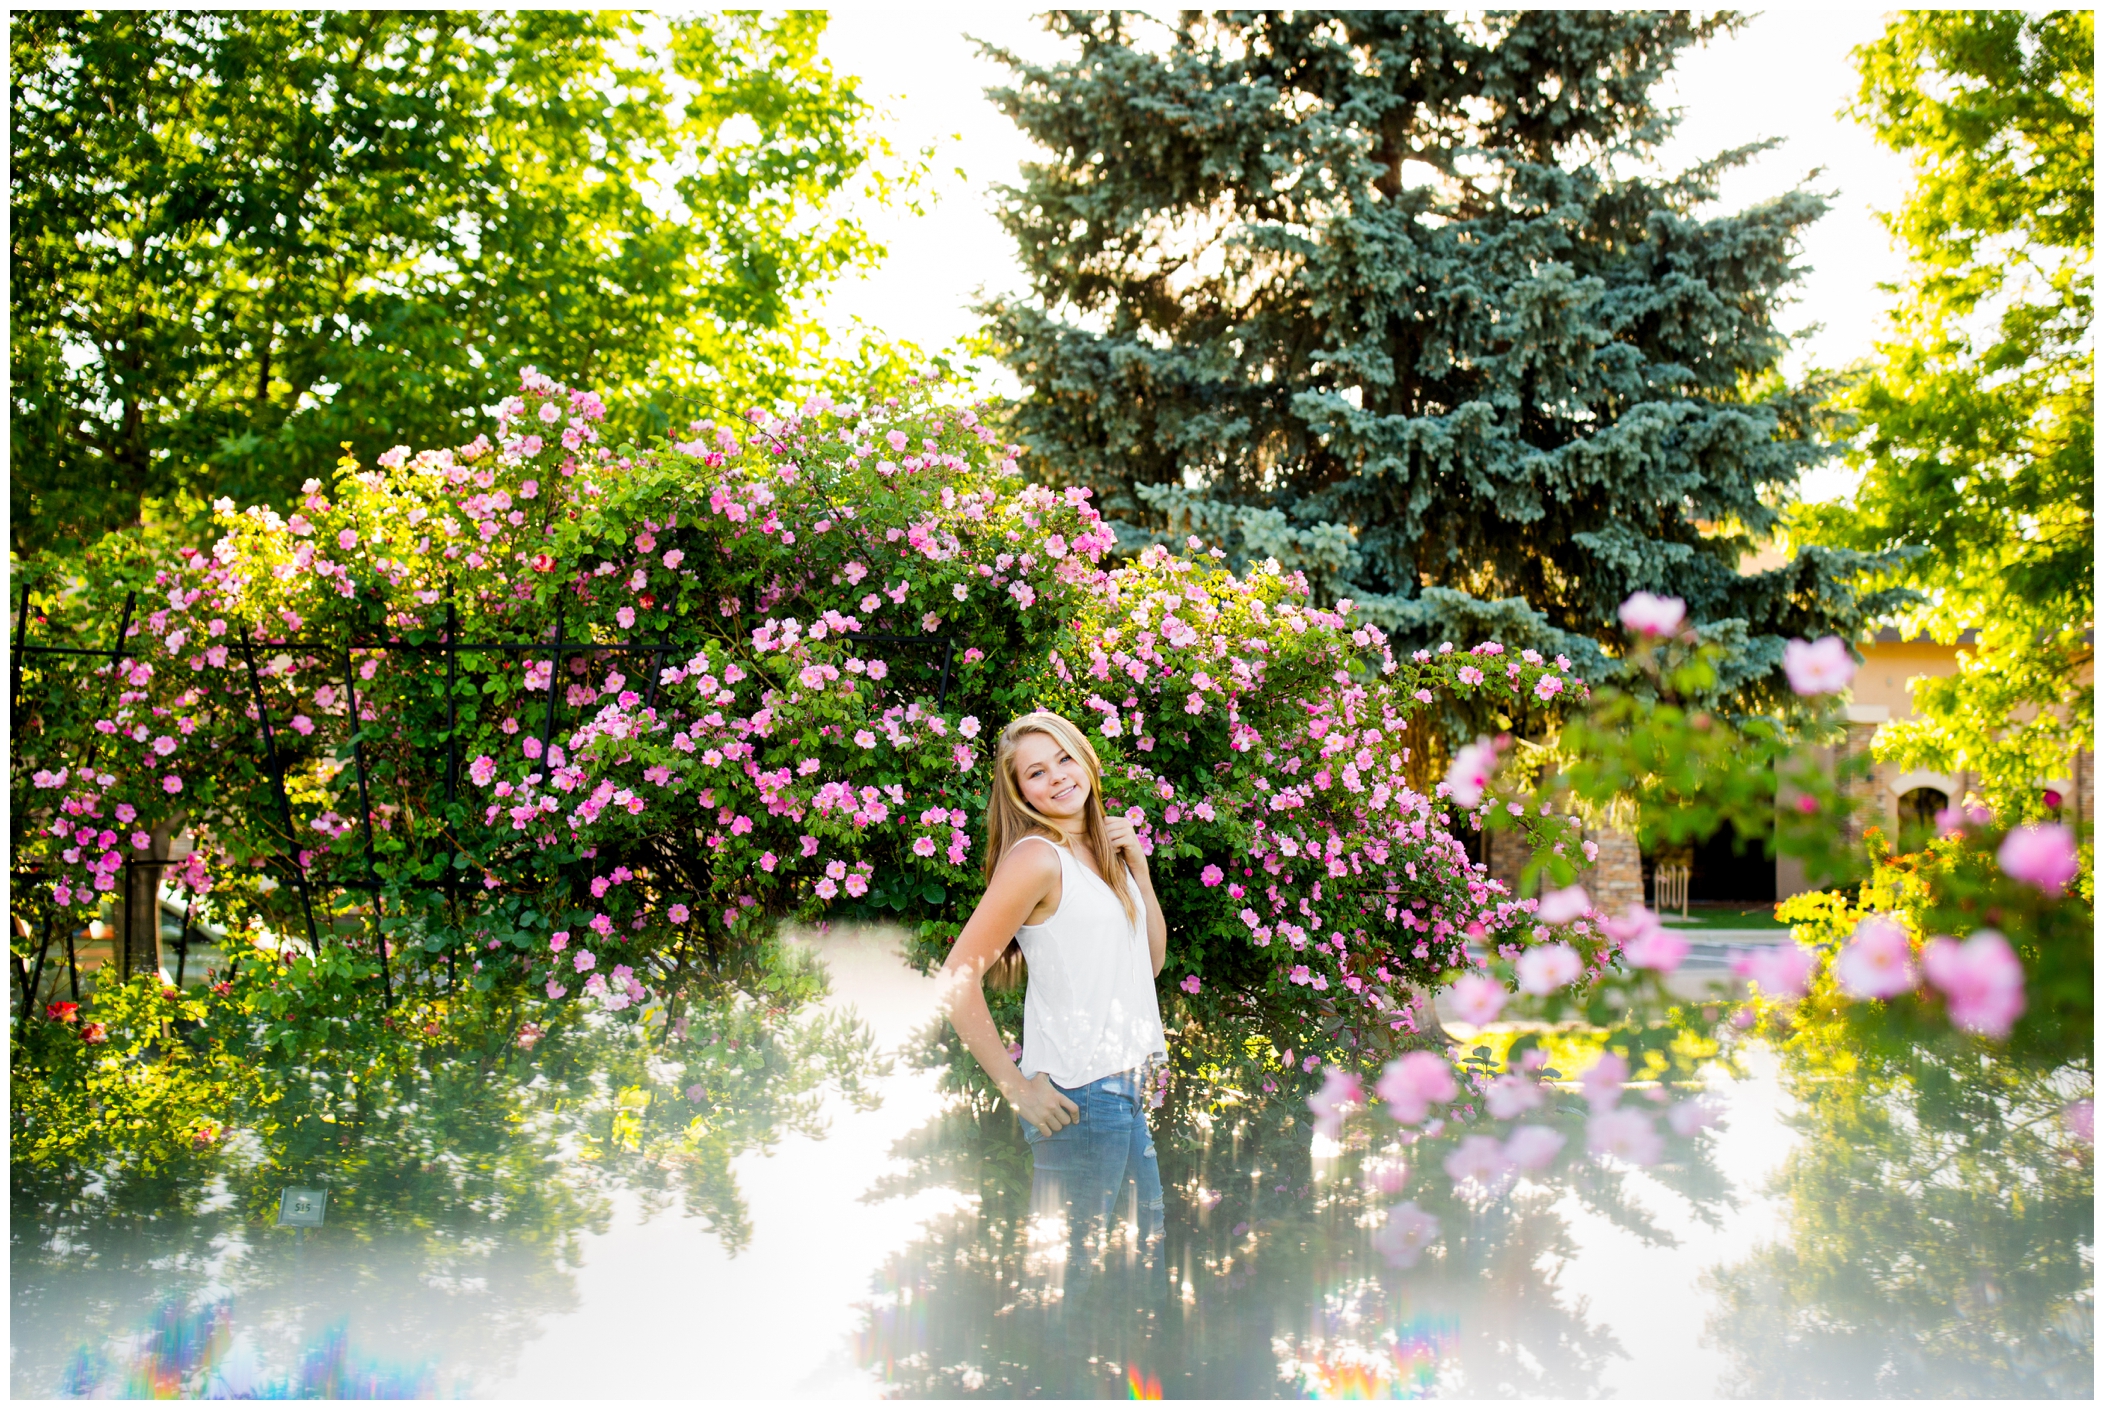 Niwot senior pictures at Roosevelt Rose Gardens by Longmont Colorado portrait photographer Plum Pretty Photography